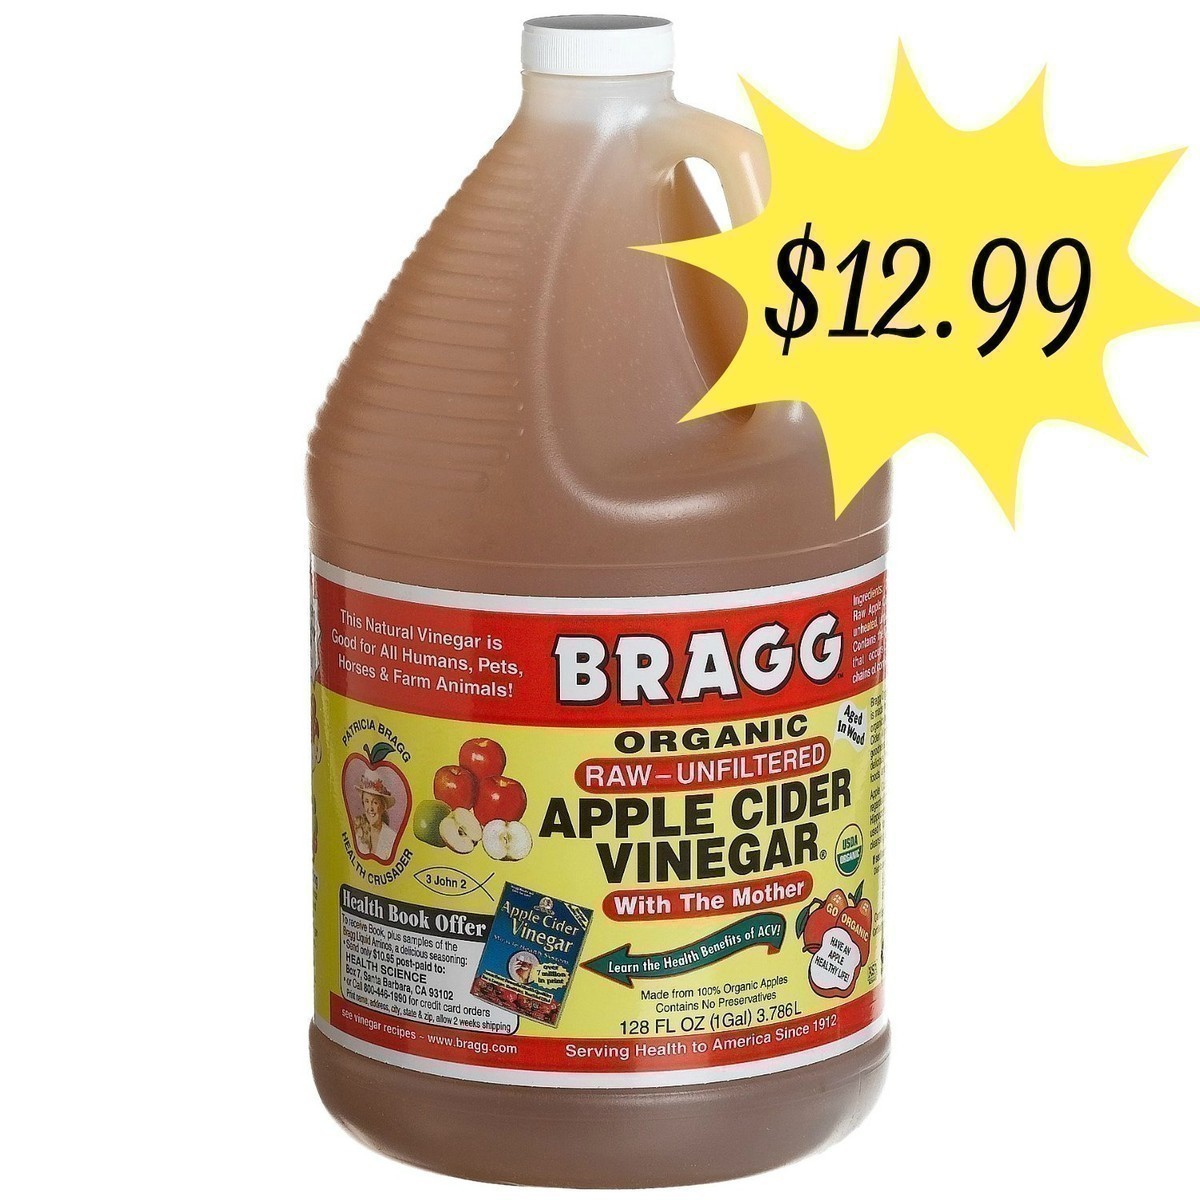 Bragg Organic Raw Apple Cider Vinegar Gallon just $12.99 (Today ONLY)